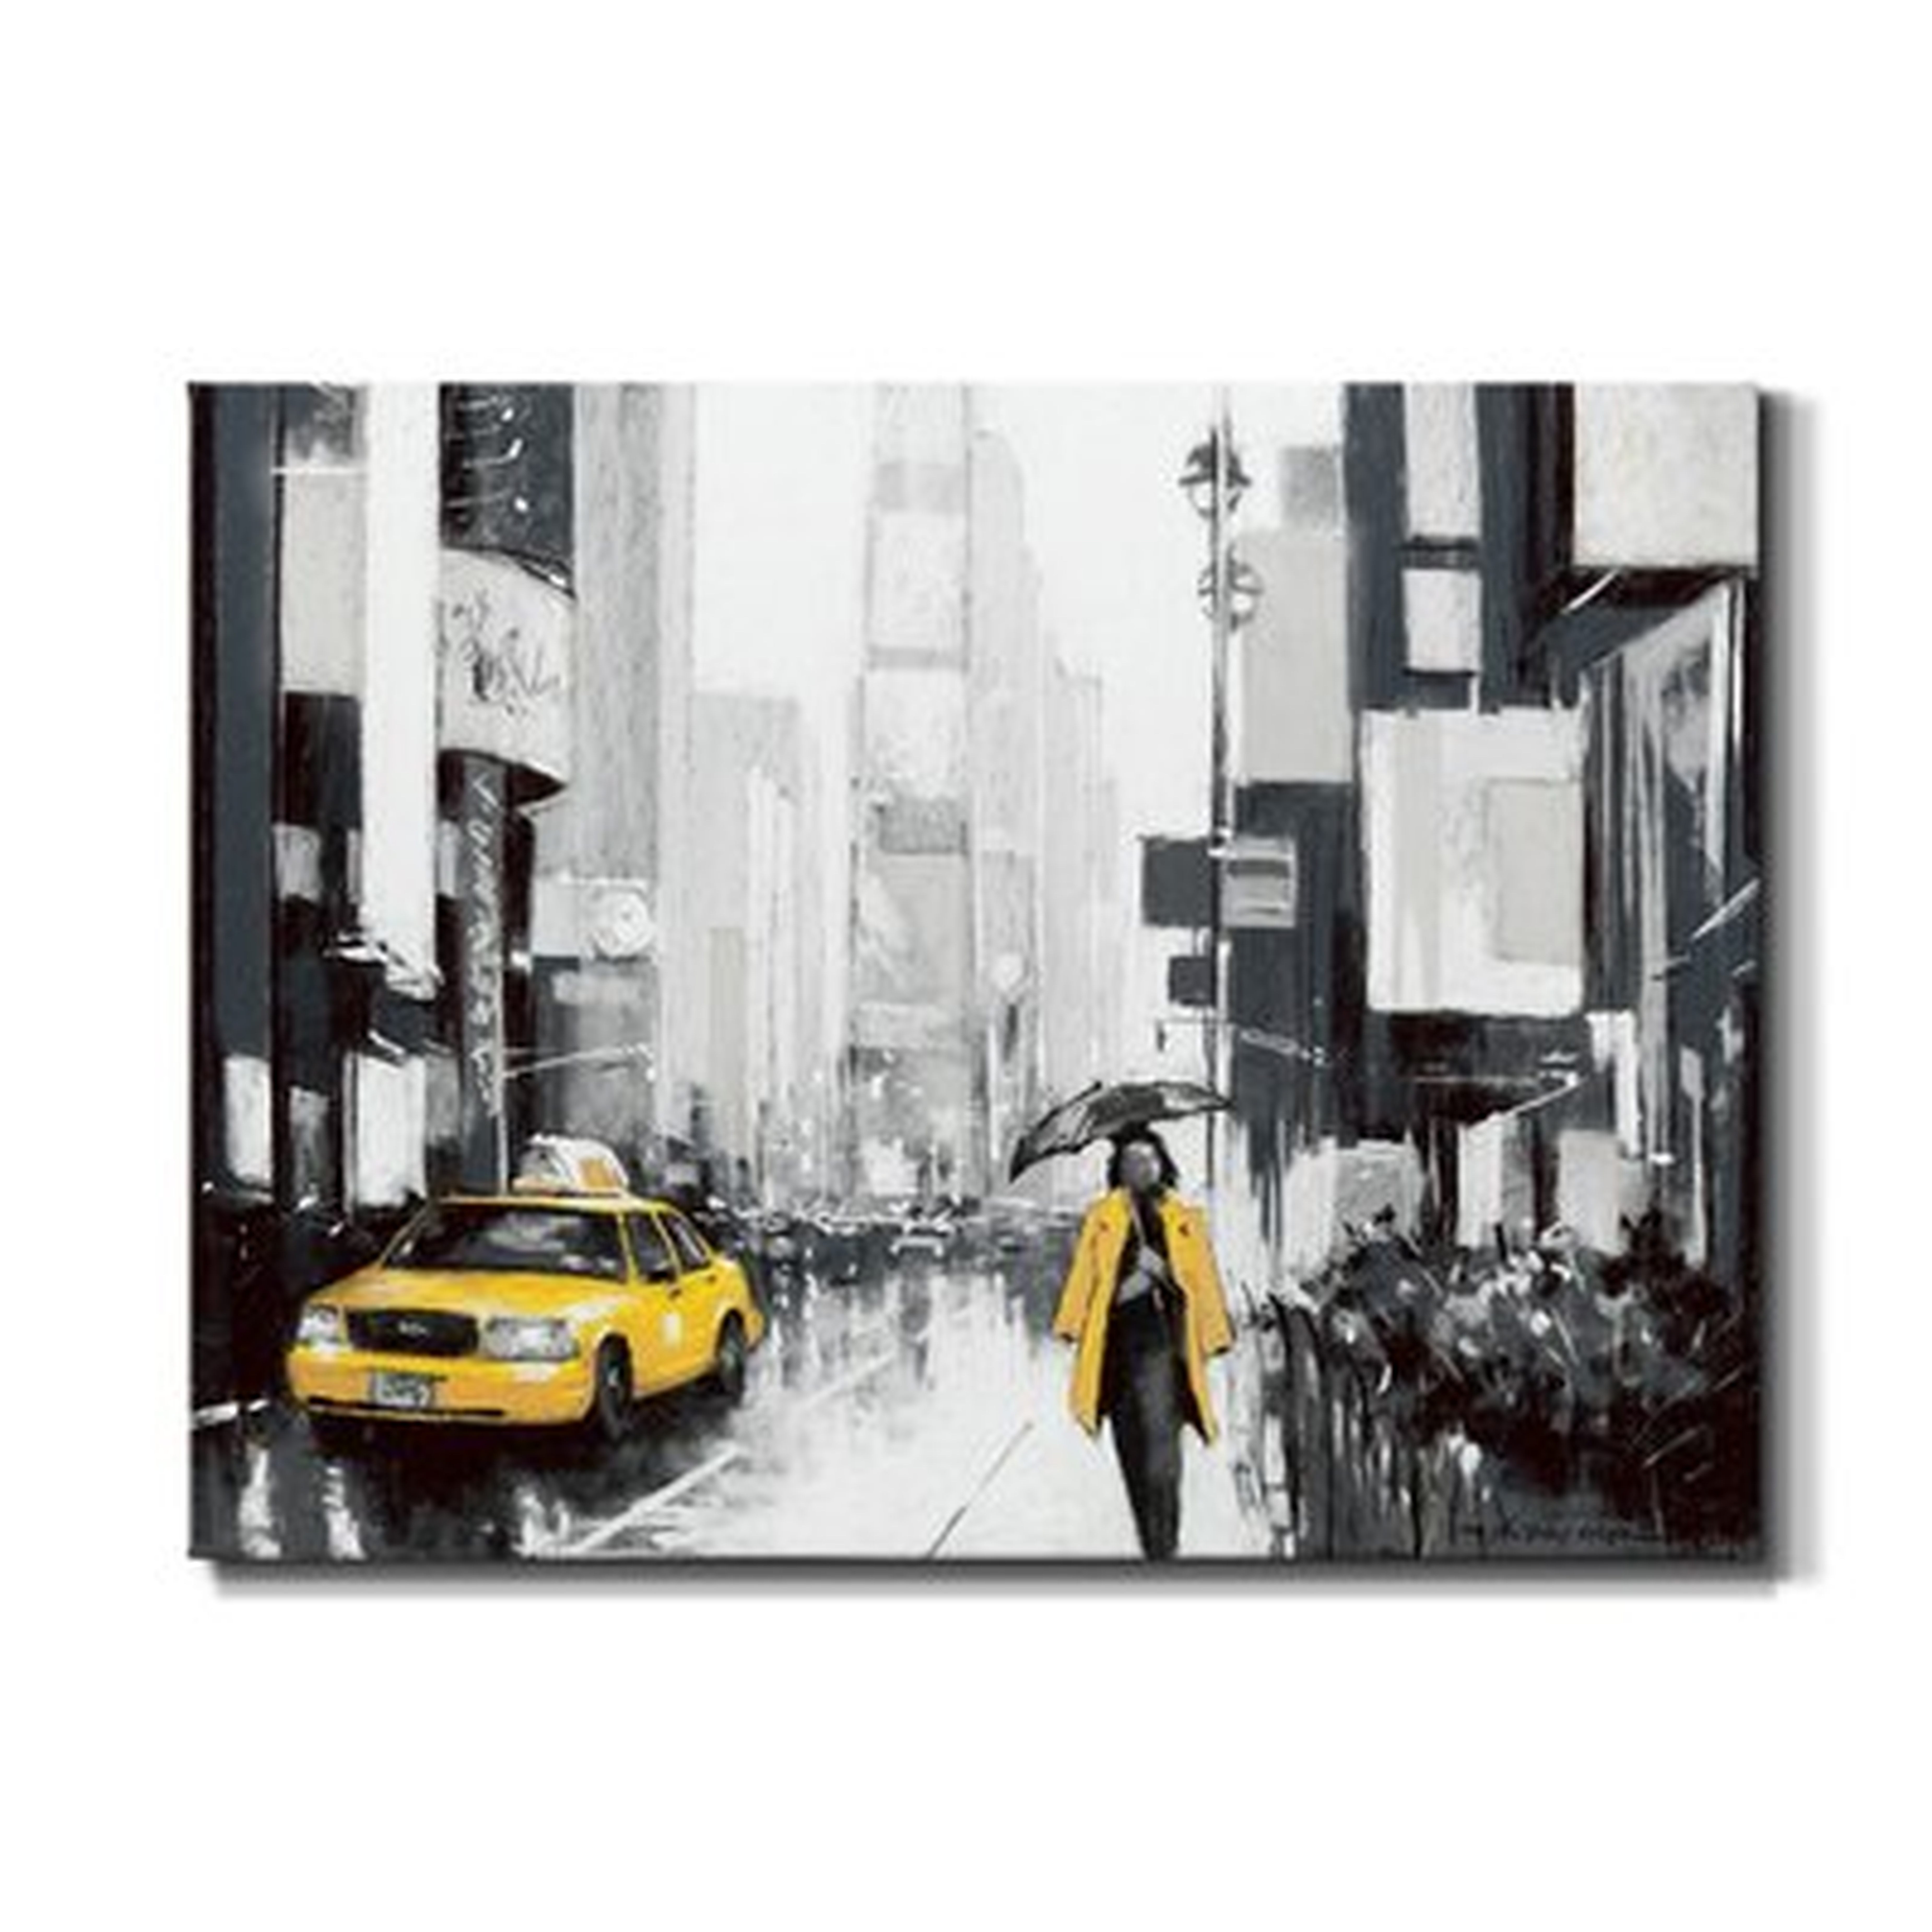 New York City II - Wrapped Canvas Print - Wayfair